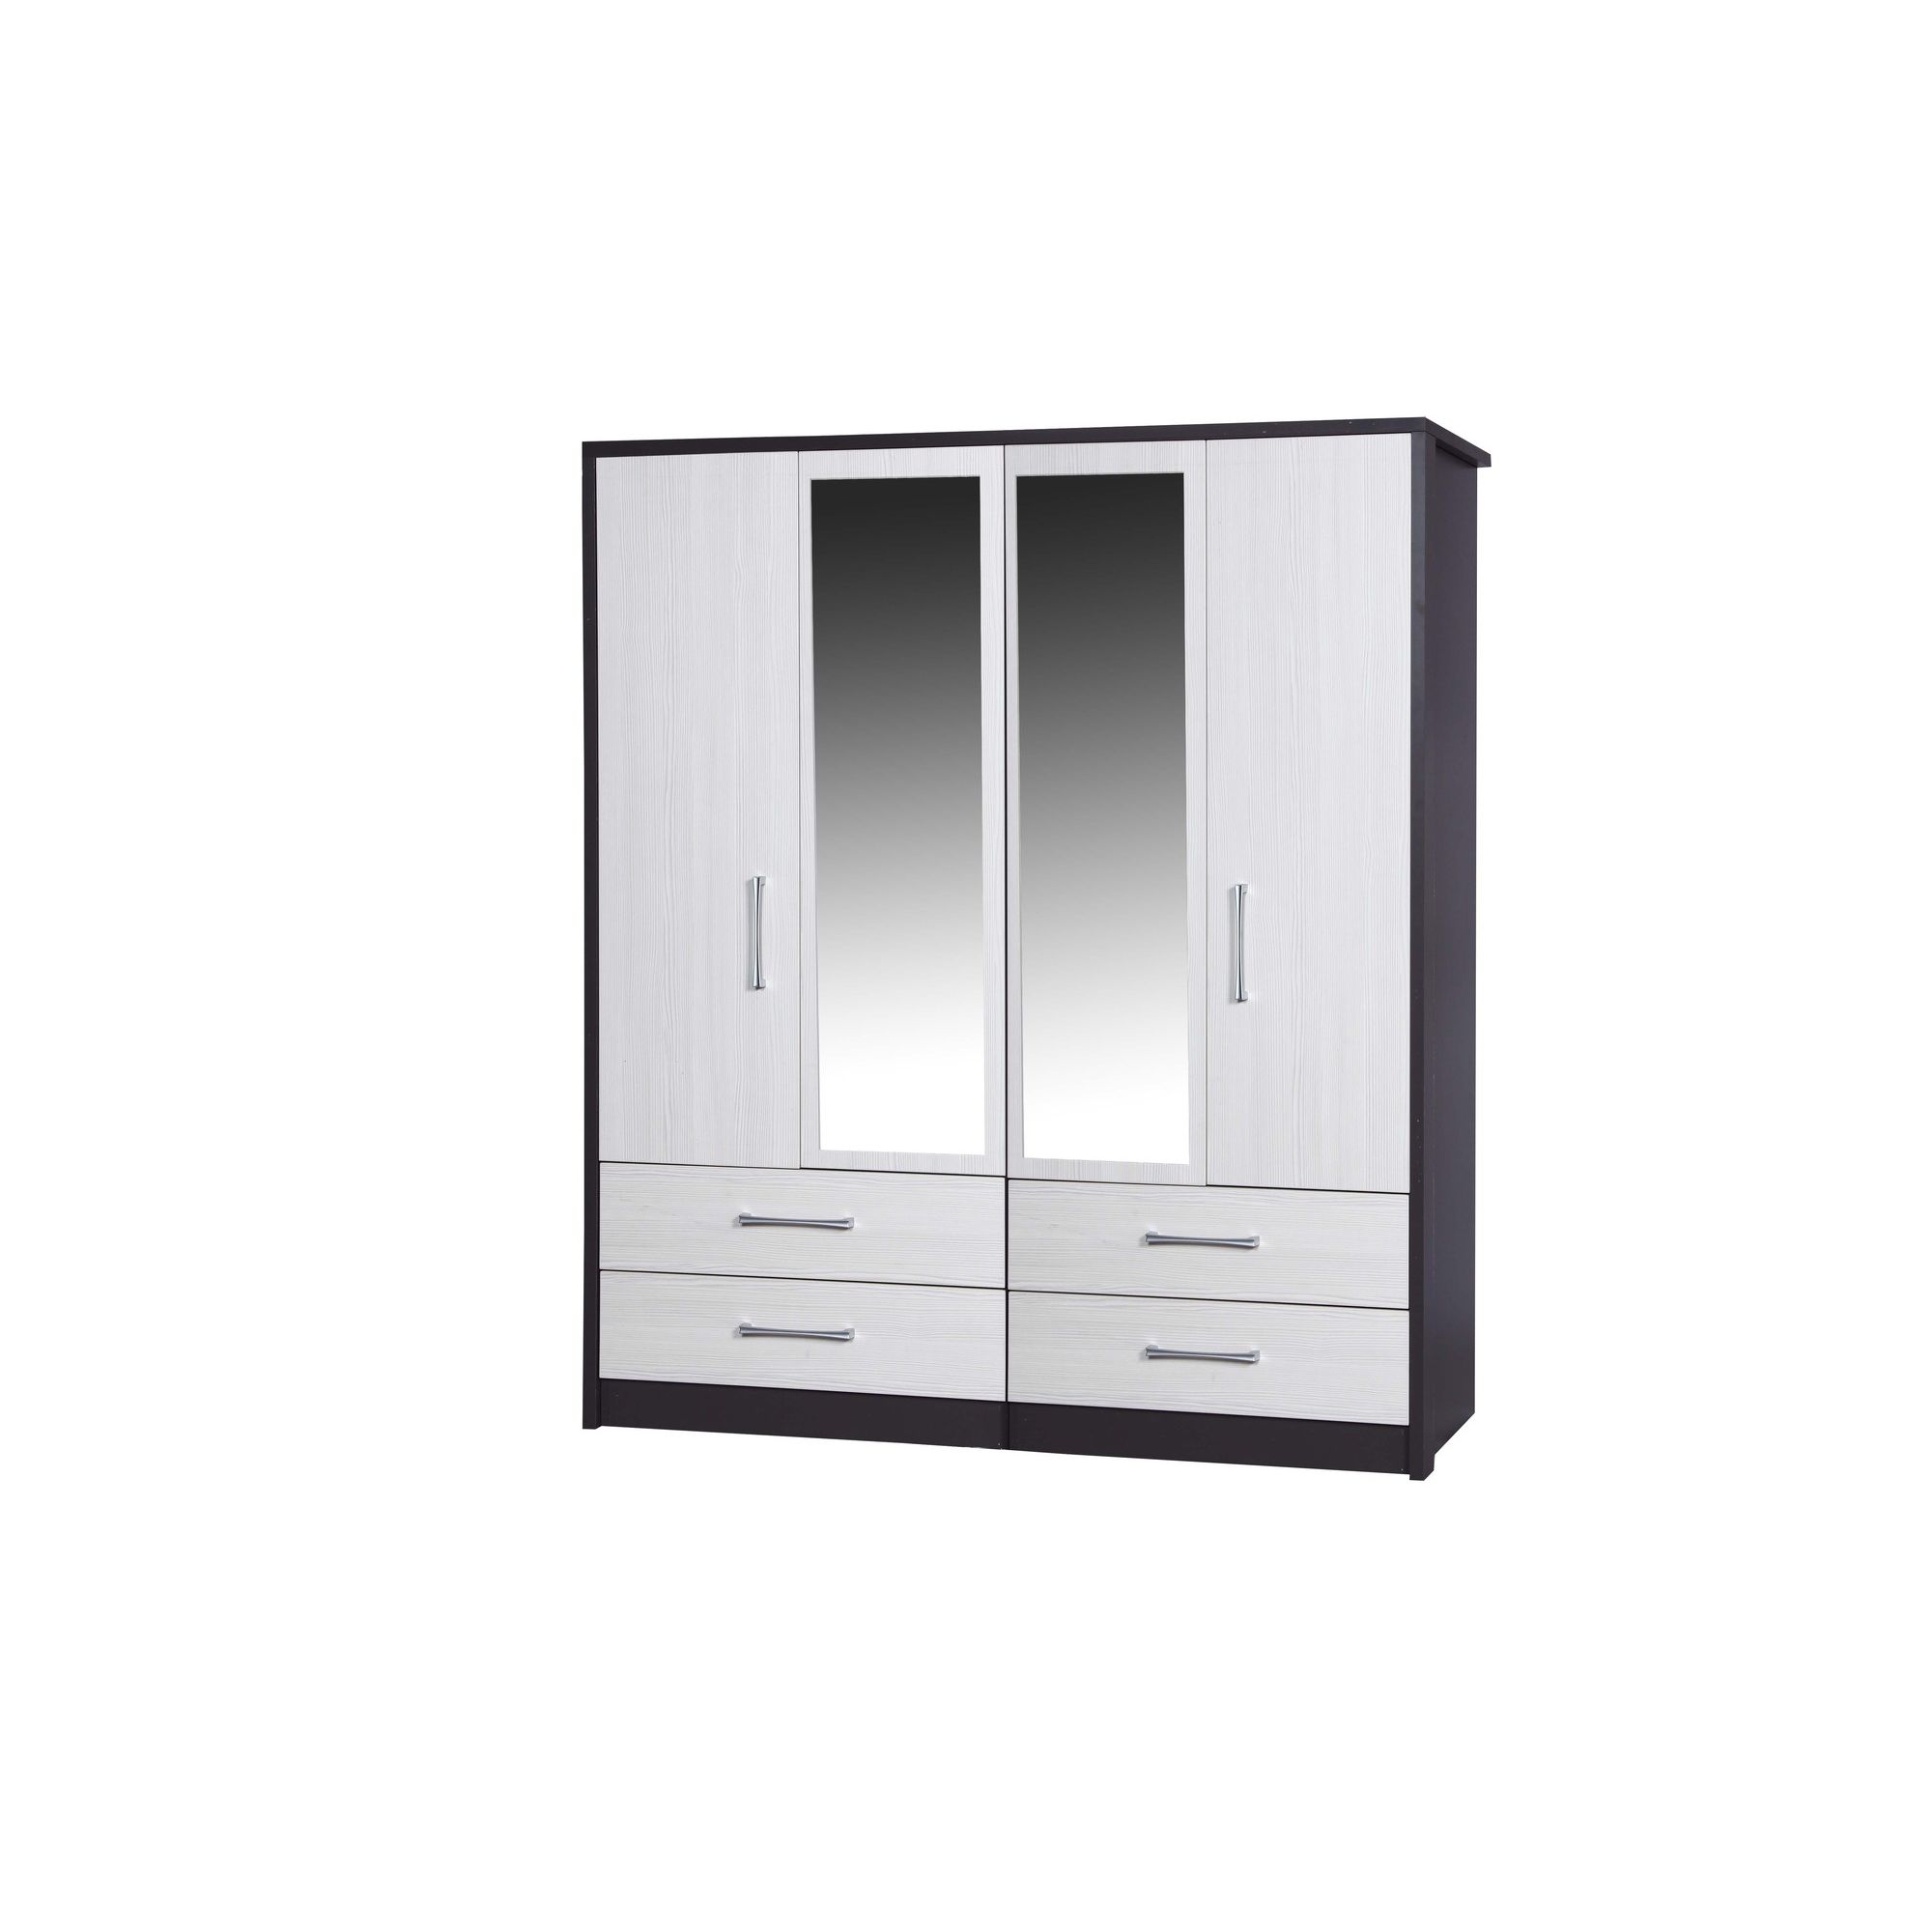 Alto Furniture Avola 4 Door Combi Wardrobe with 2 Mirrors - Grey Carcass With White Avola at Tesco Direct